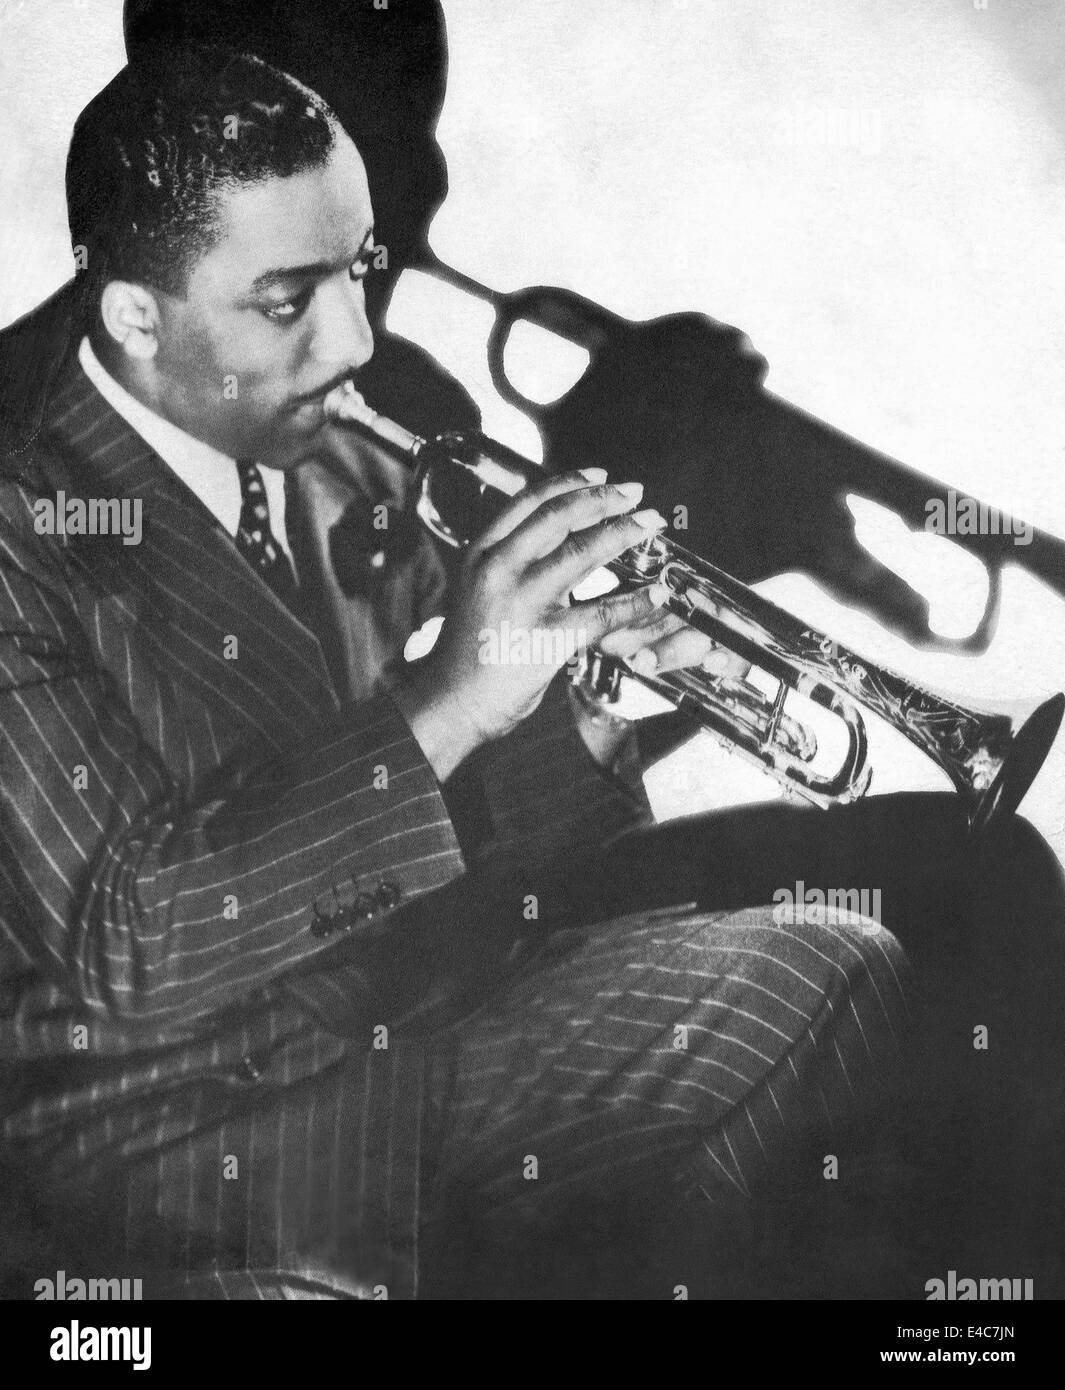 Erskine Hawkins, American Trumpet Player and Big Band Leader, Portrait, circa 1930's Stock Photo